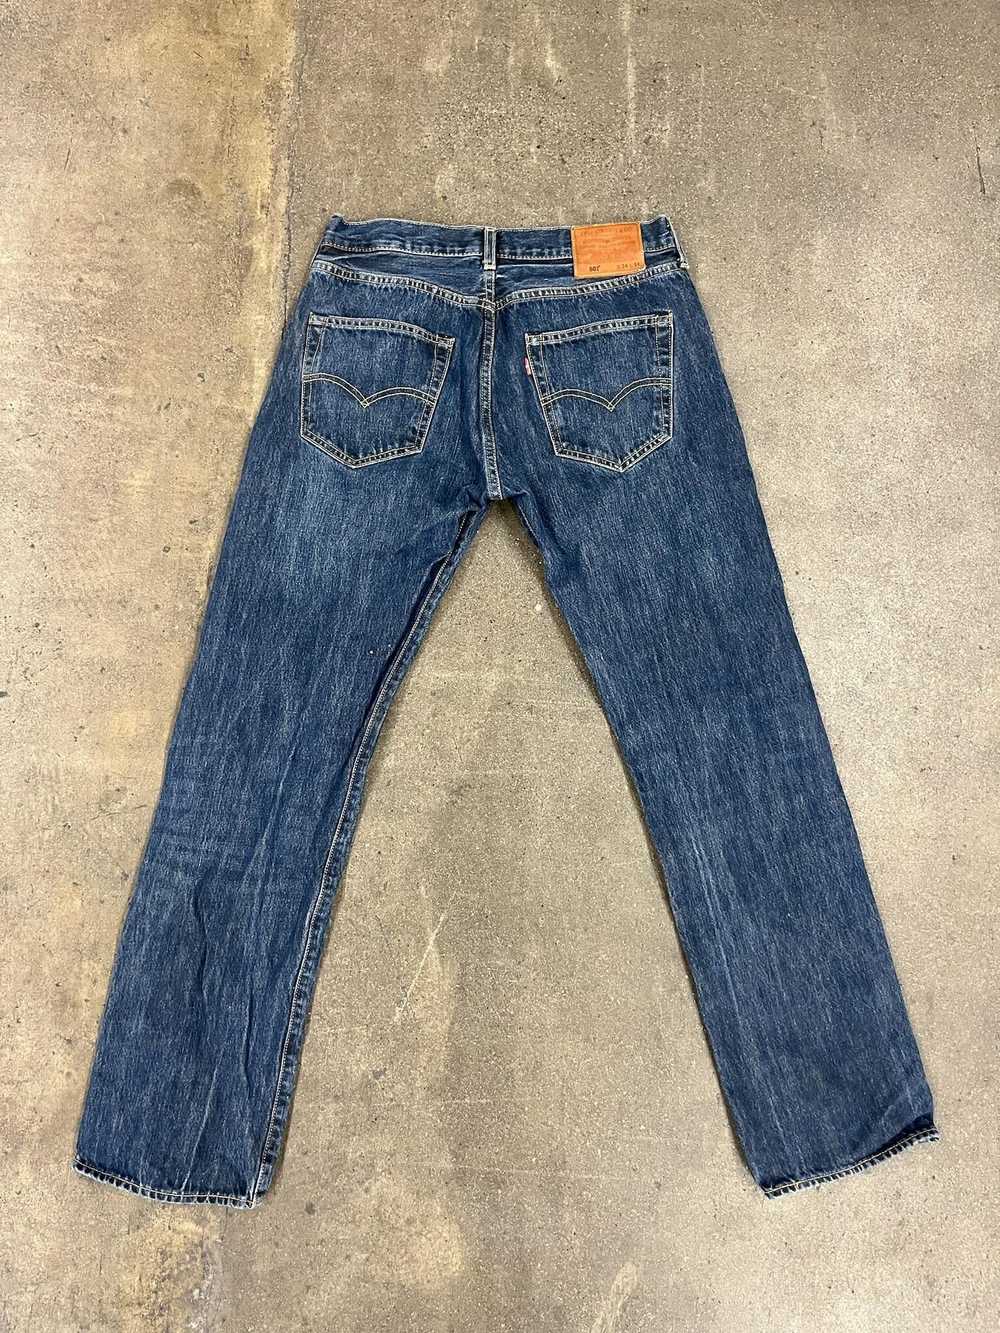 Streetwear × Vintage Levis LVC 501 Slim Fit Jeans - image 3